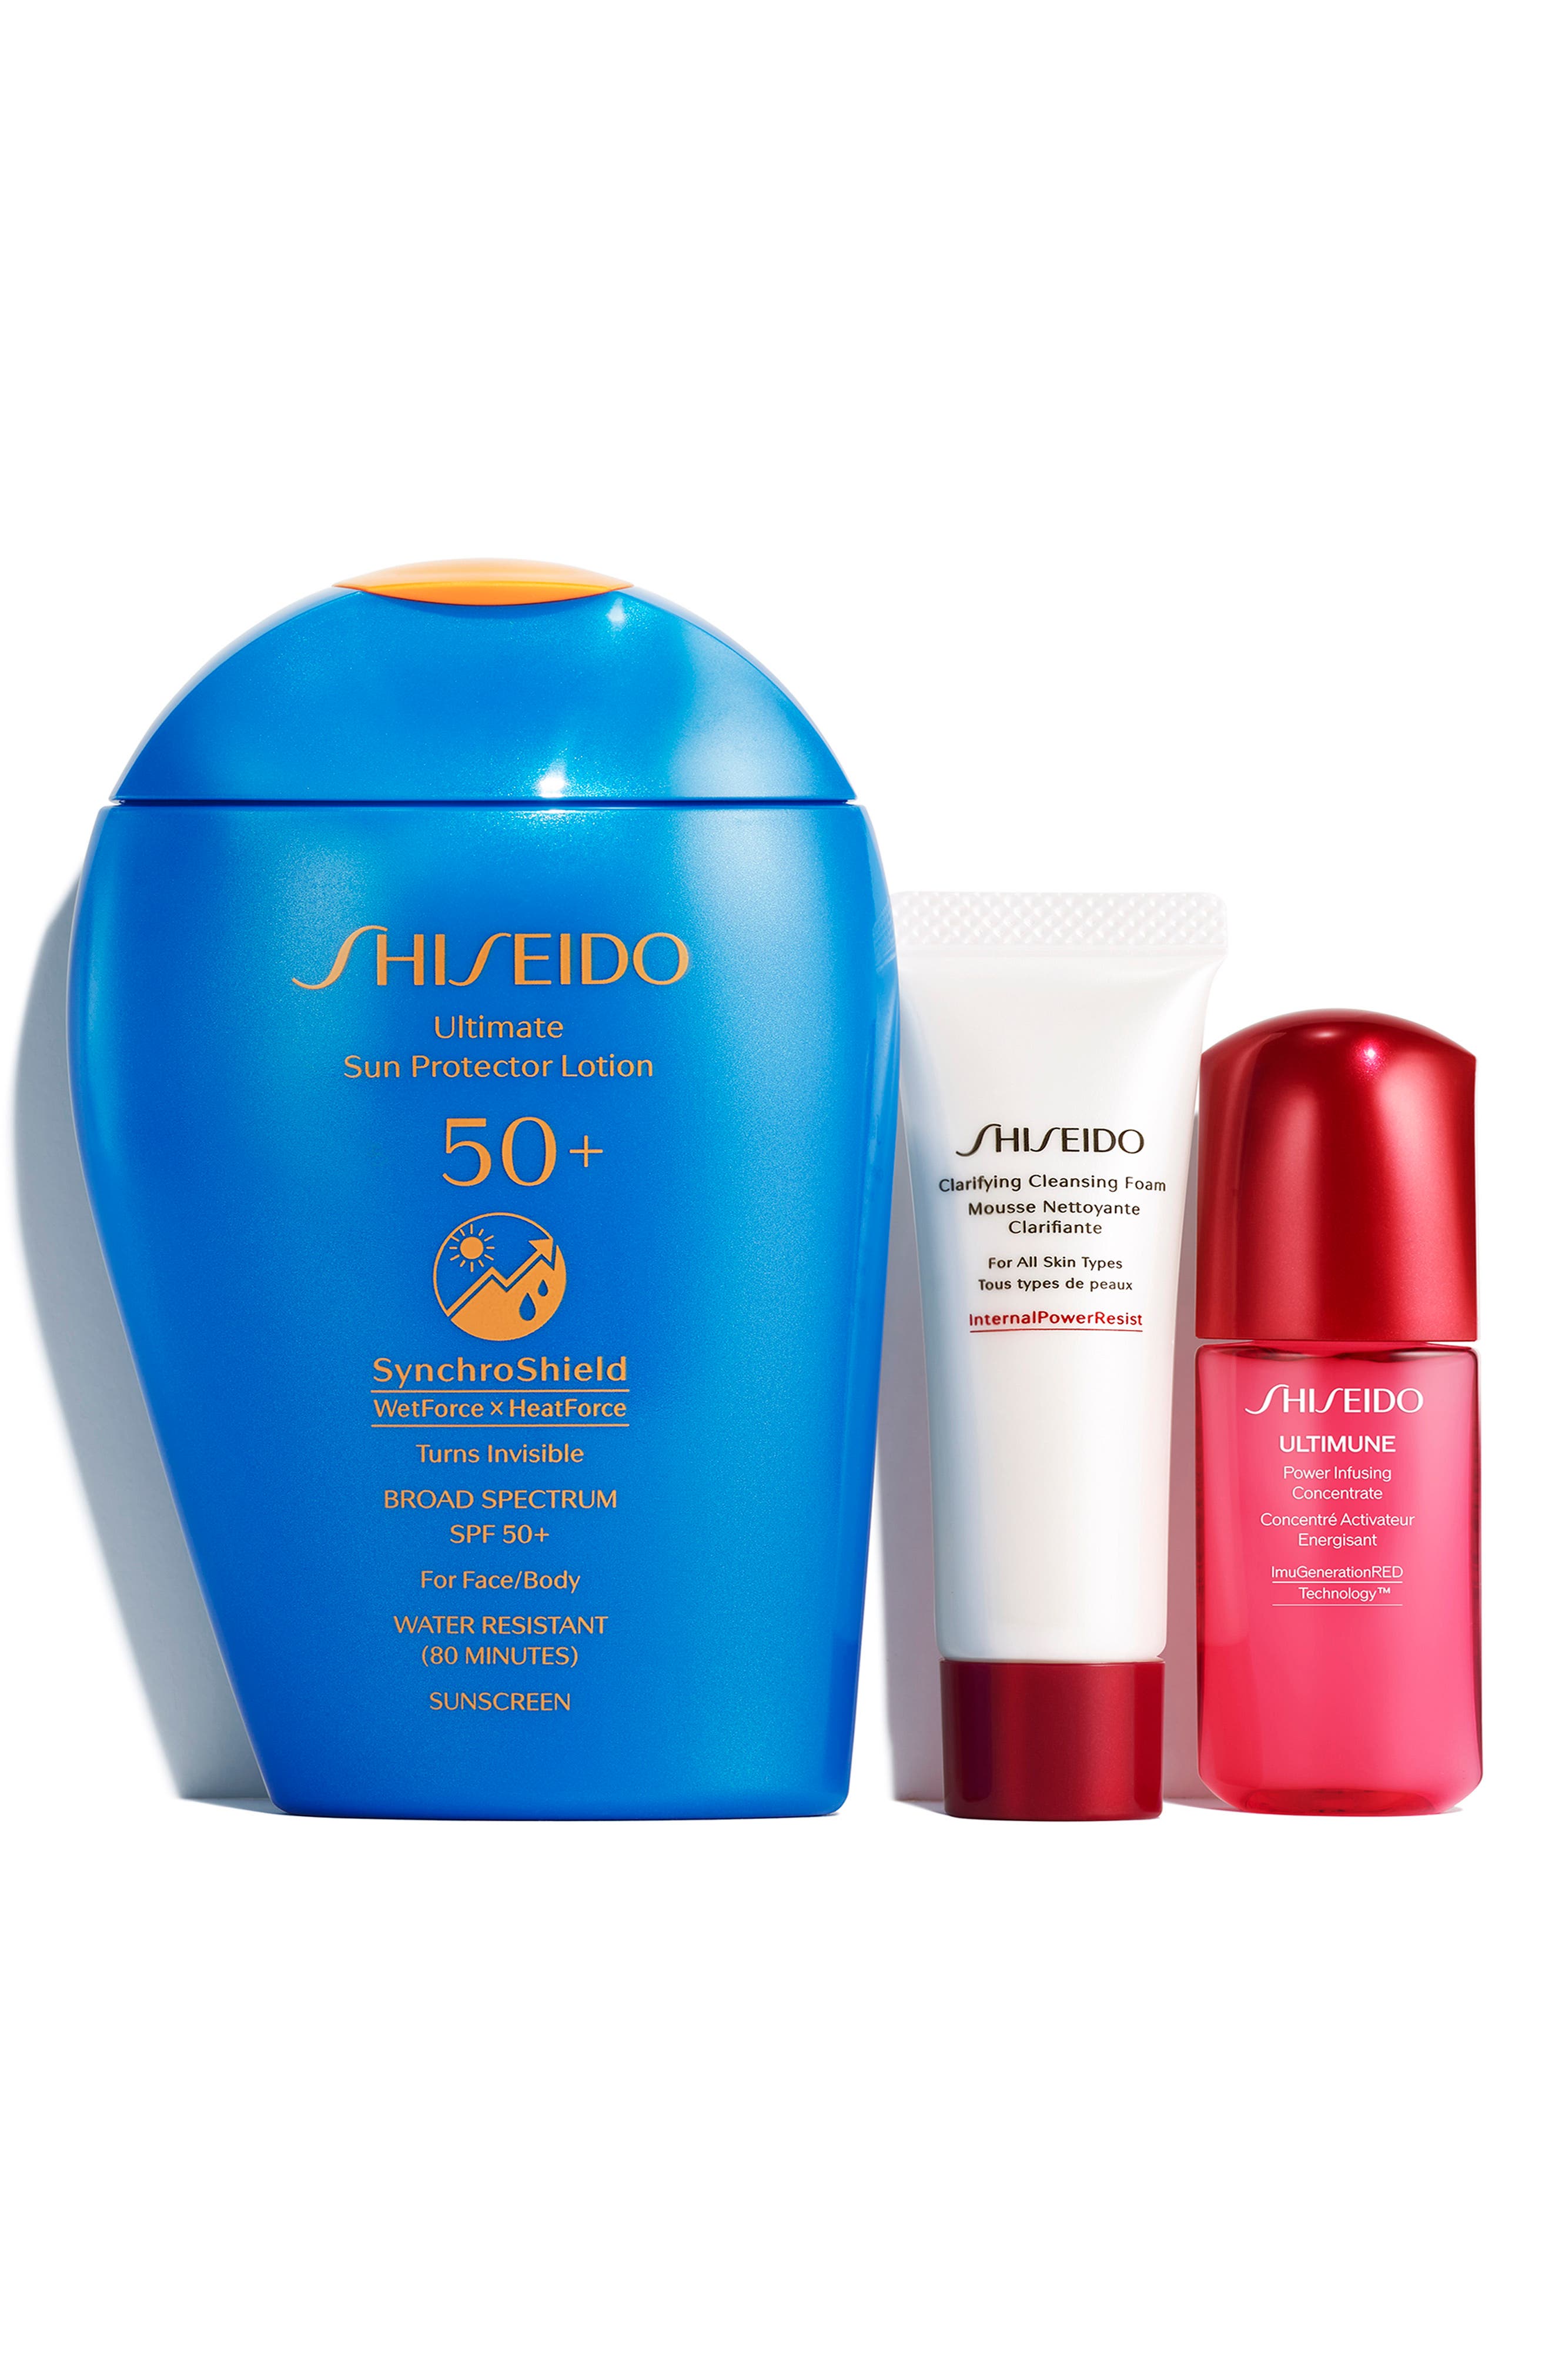 Shiseido Ultimate Active Sun Protection Set ($79 Value)